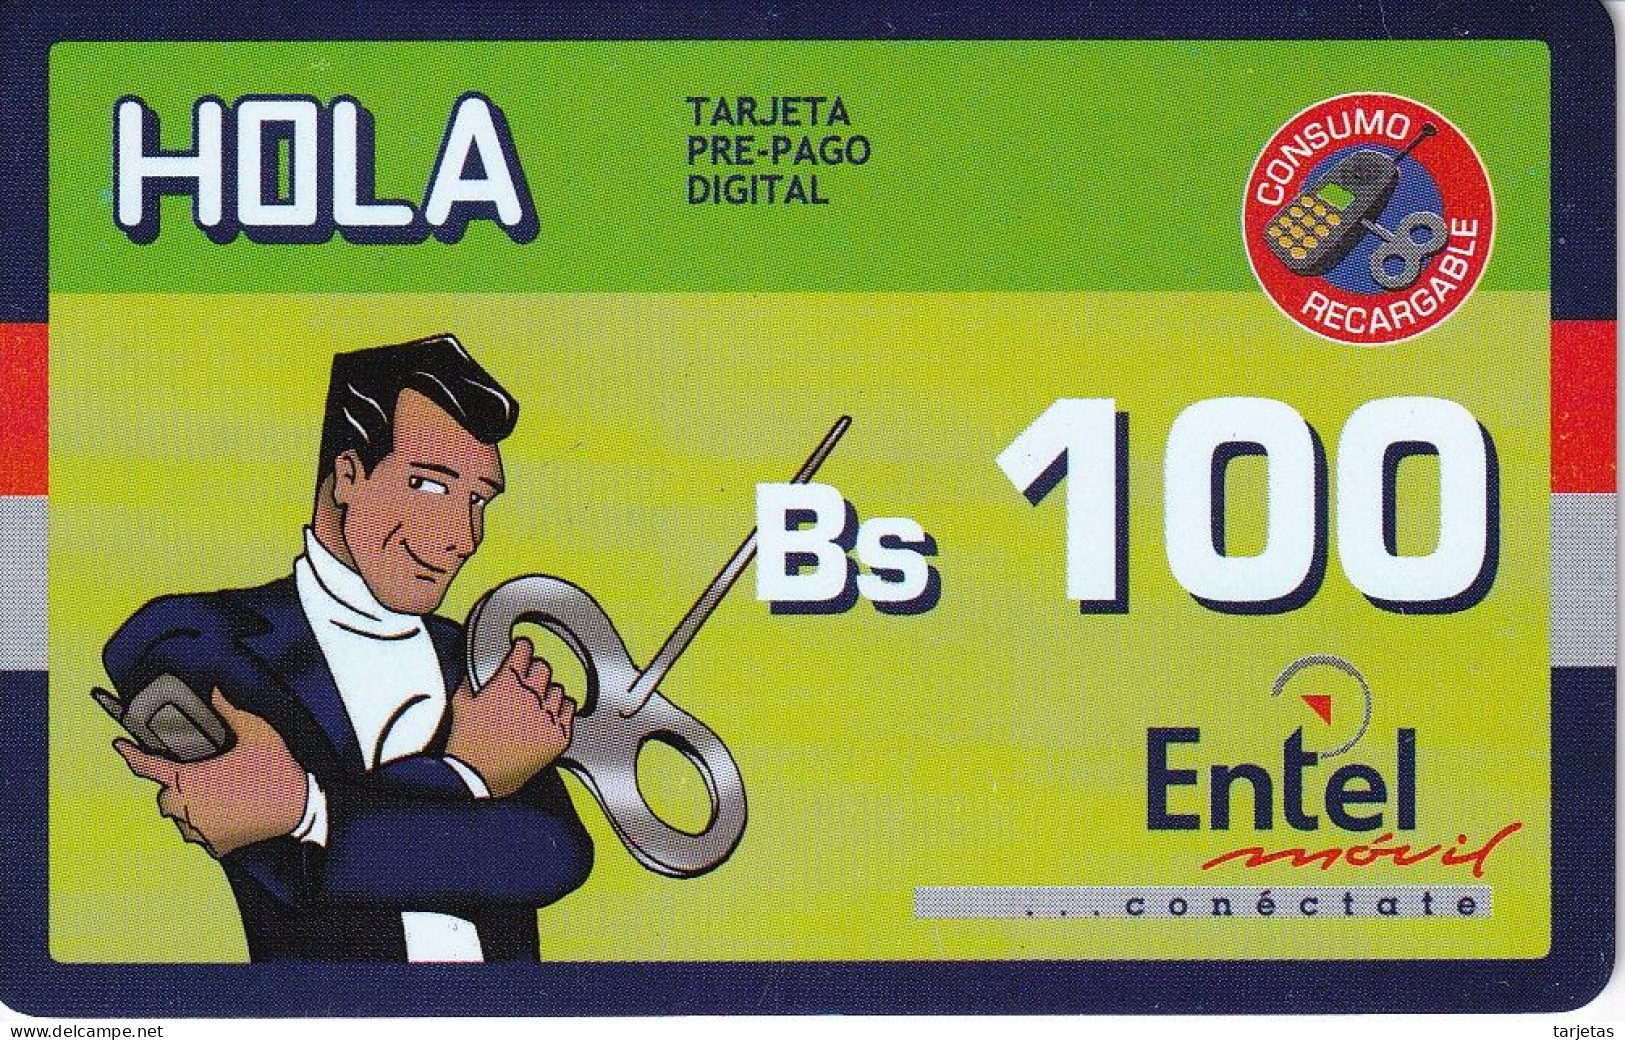 TARJETA DE BOLIVIA DE Bs 100 DE ENTEL - CLUB HOLA - 2 PUNTOS CON CODIGO DE BARRAS - Bolivien